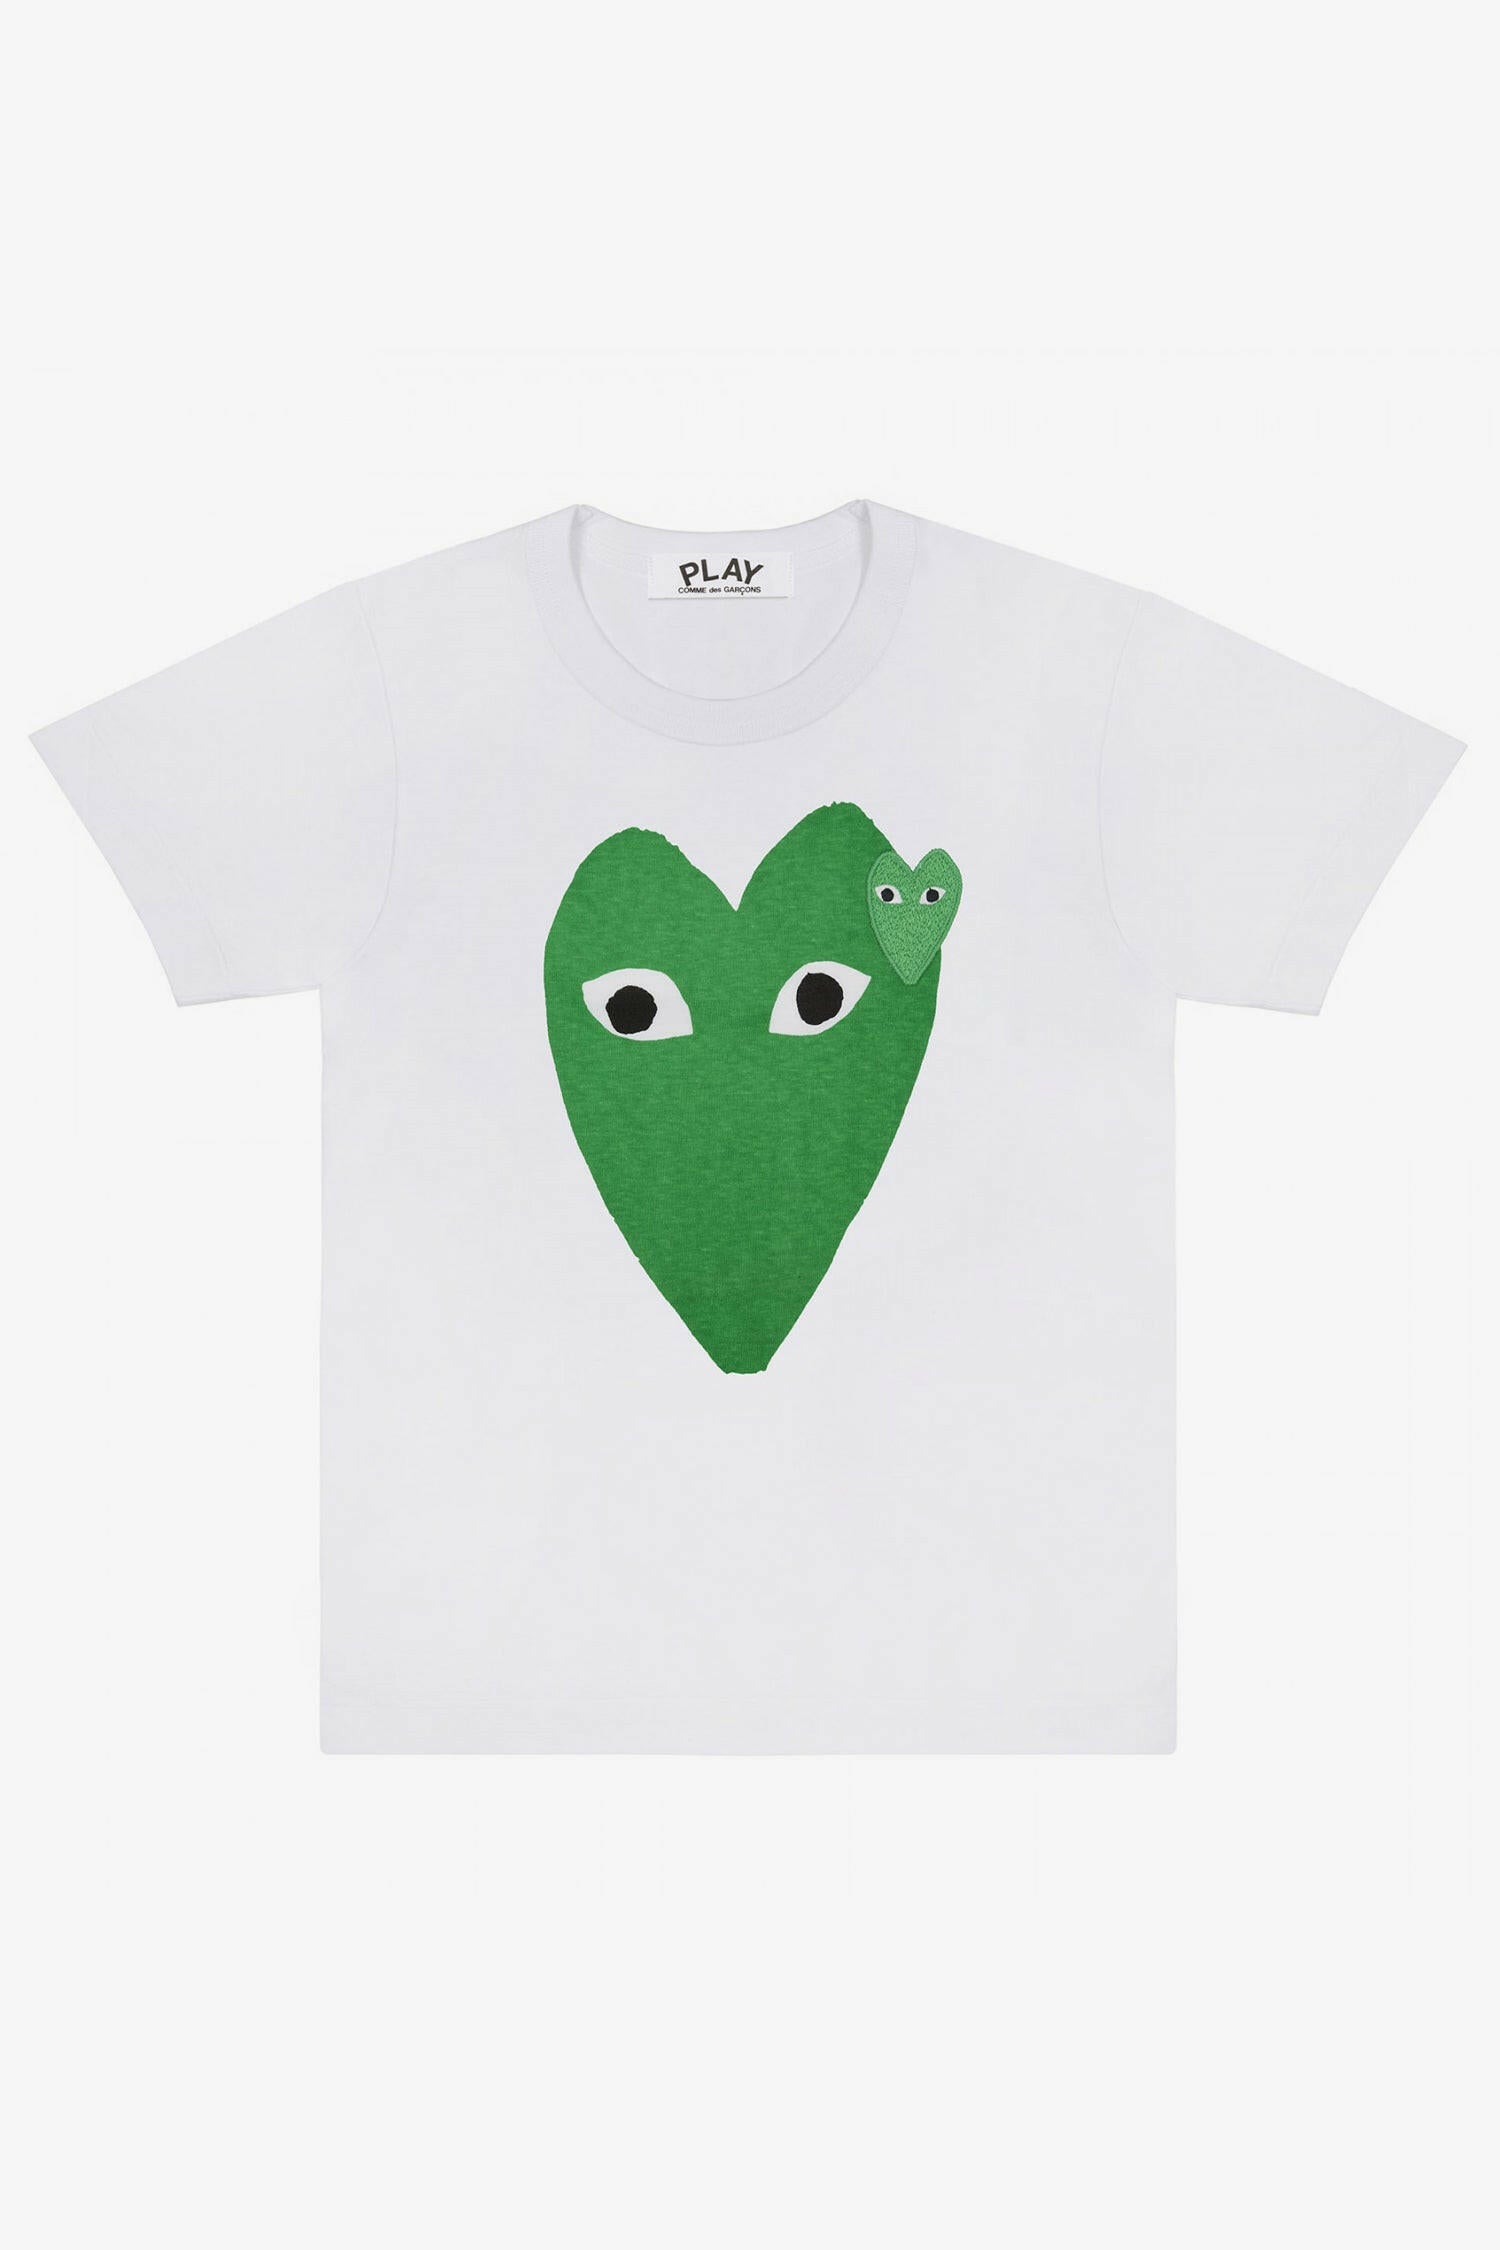 Selectshop FRAME - COMME DES GARCONS PLAY Long Green Heart T-Shirt T-Shirt Dubai